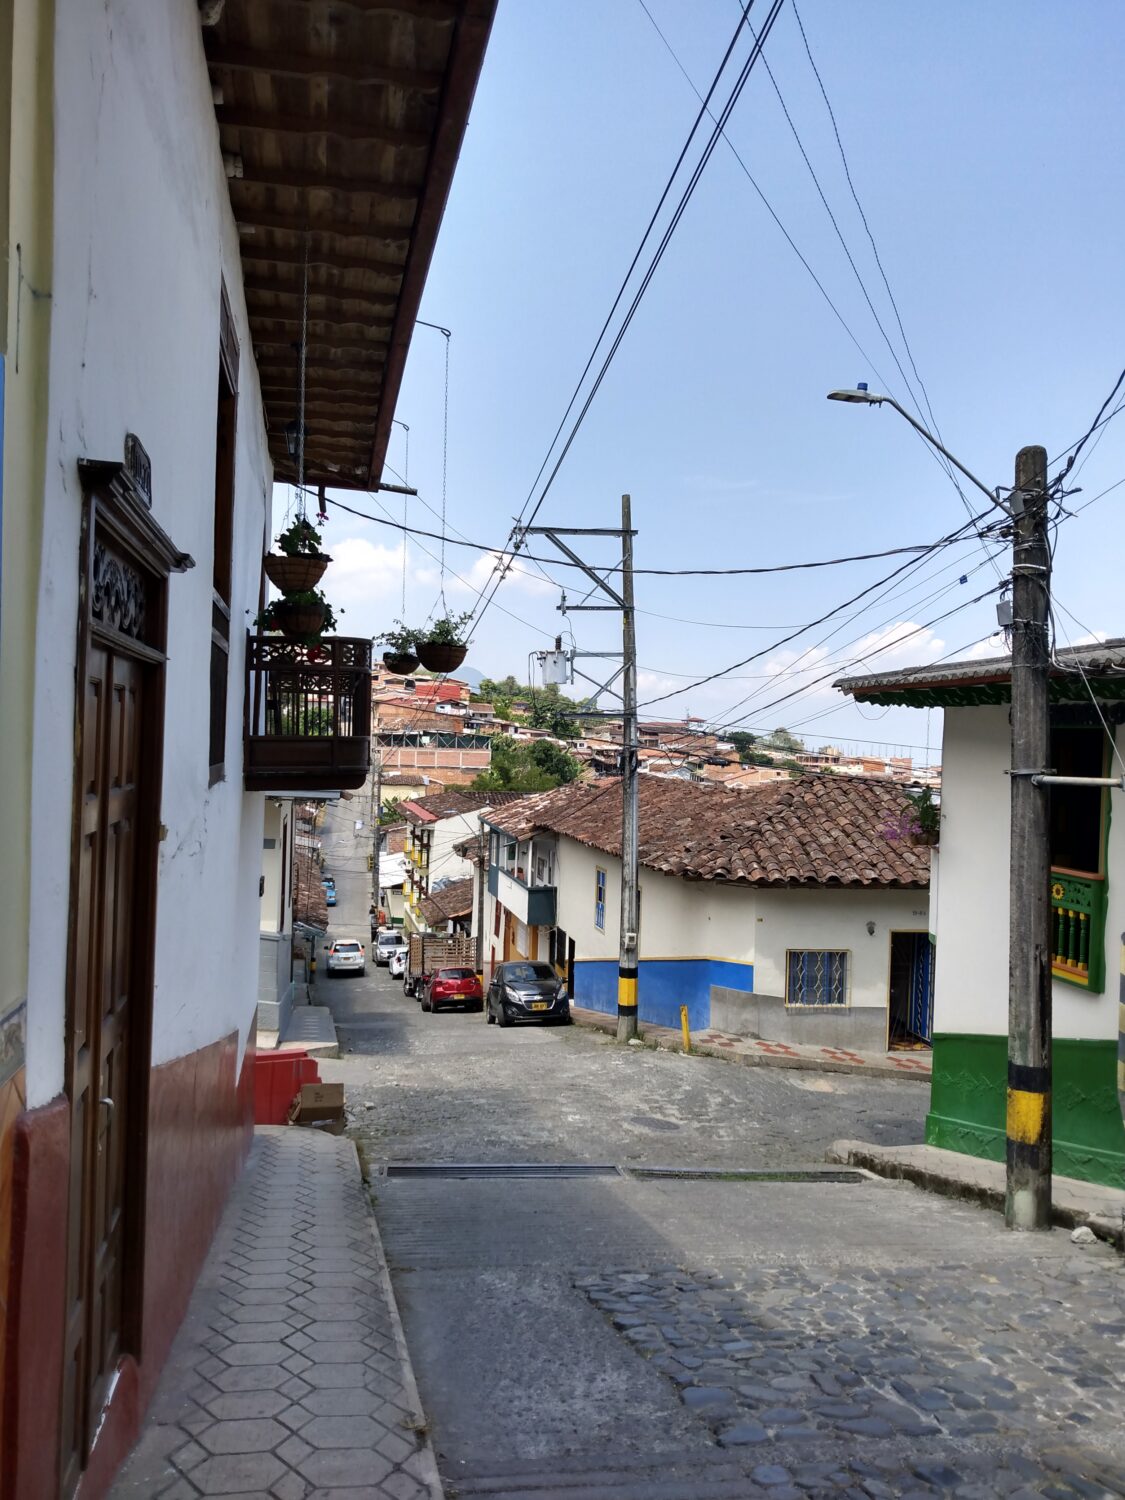 Támesis, Colombia